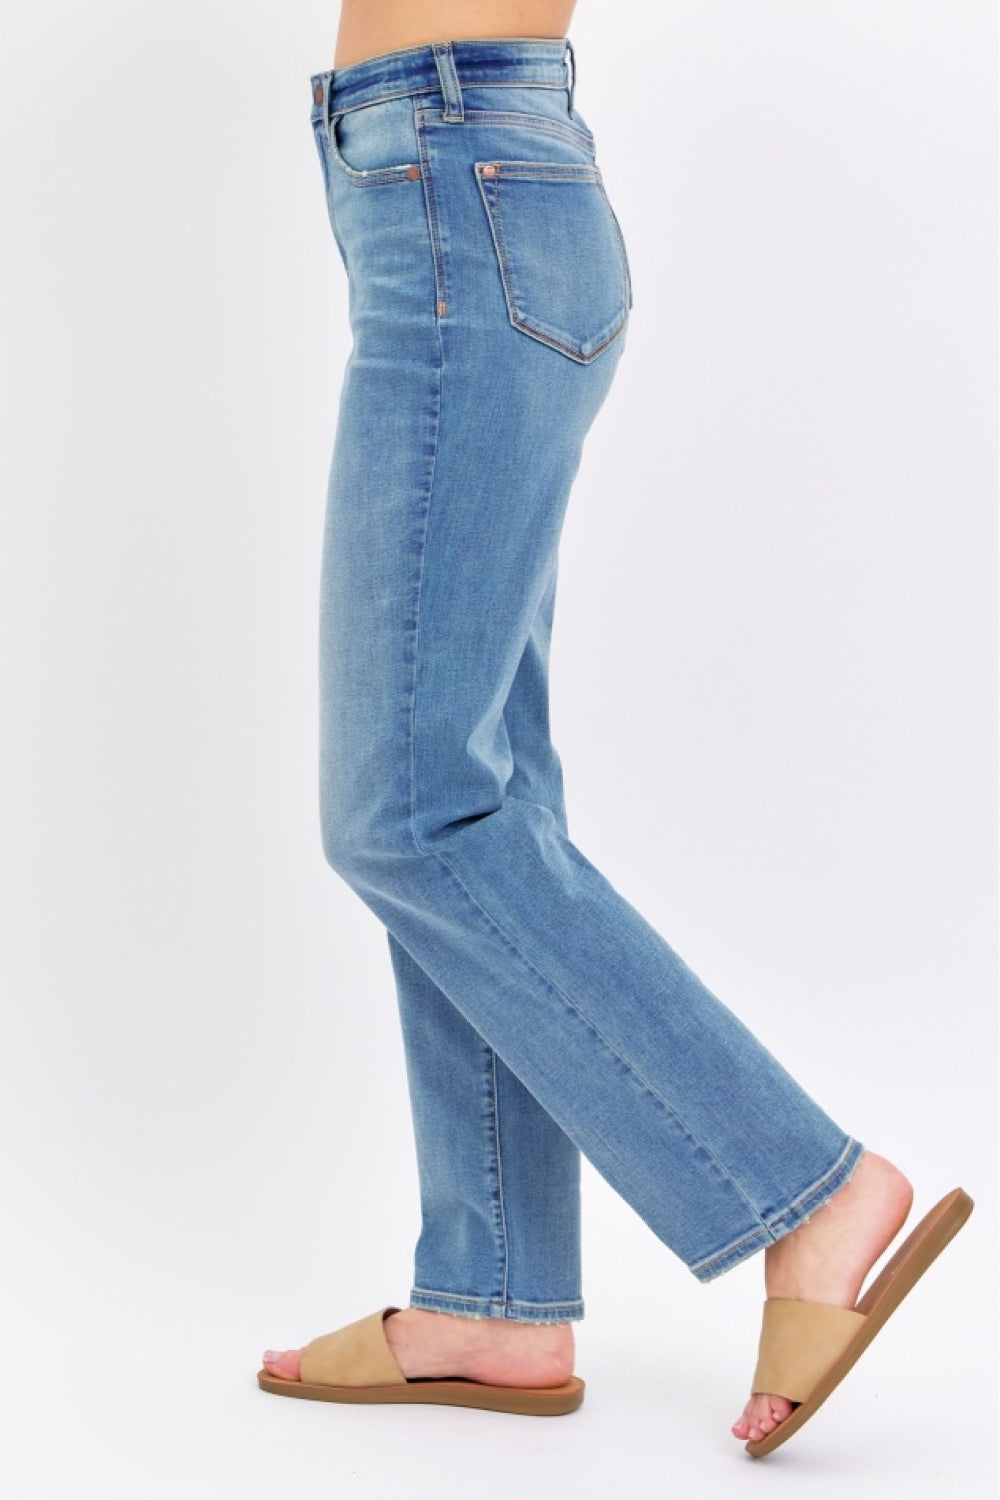 Judy Blue Medium Washed High Waist Straight Jeans Trendsi